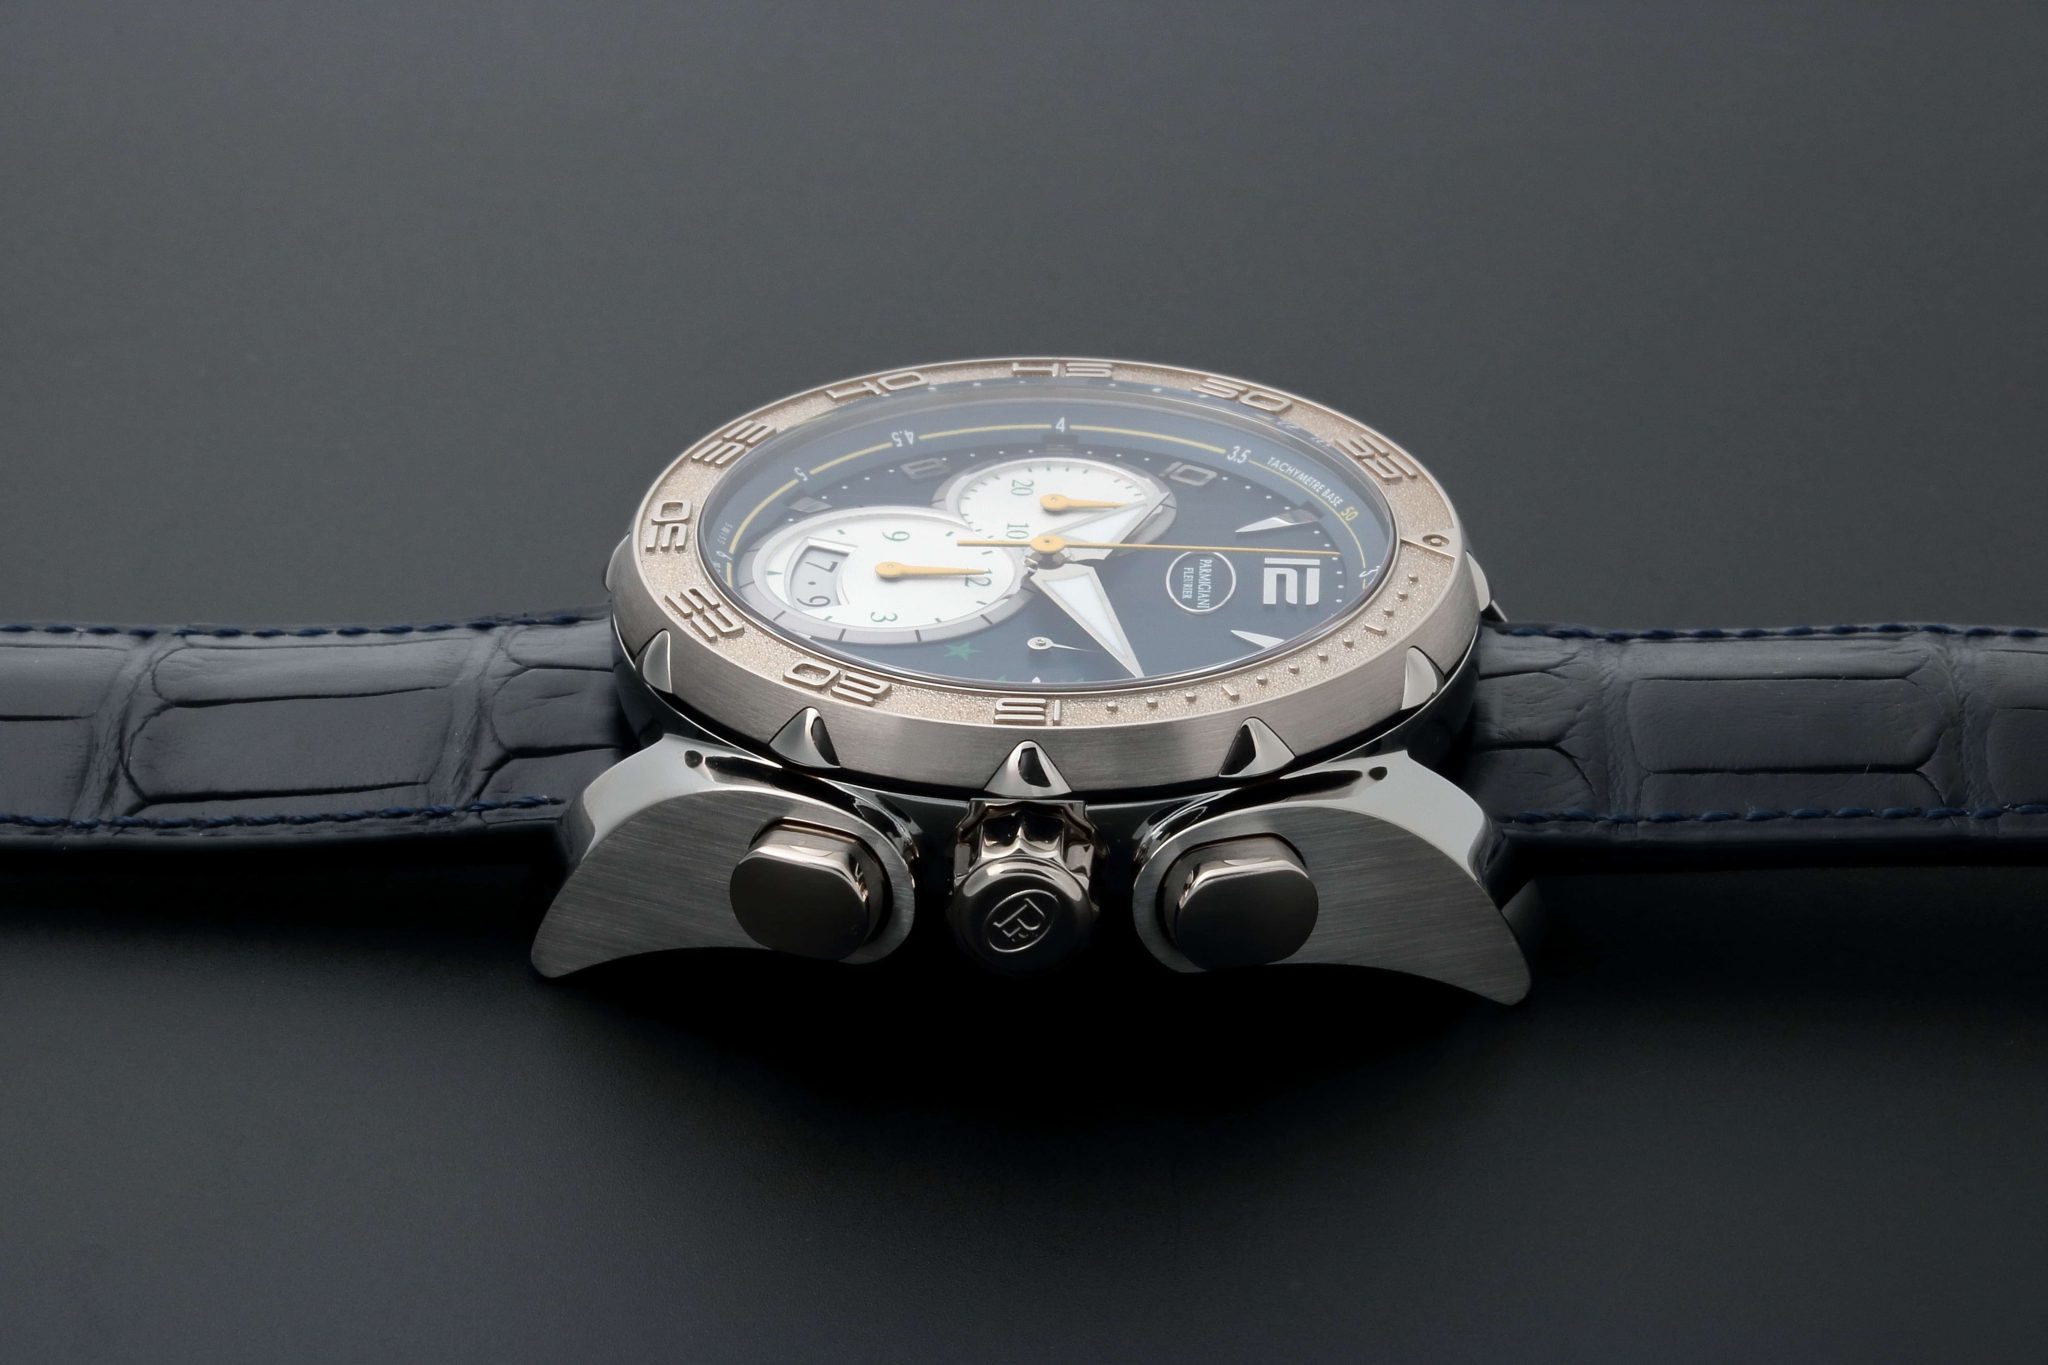 JZ&F Parmigiani Pershing 002 Steel Graphite Auto, Chronograph, Black Dial,  Bracelet - JZ&F